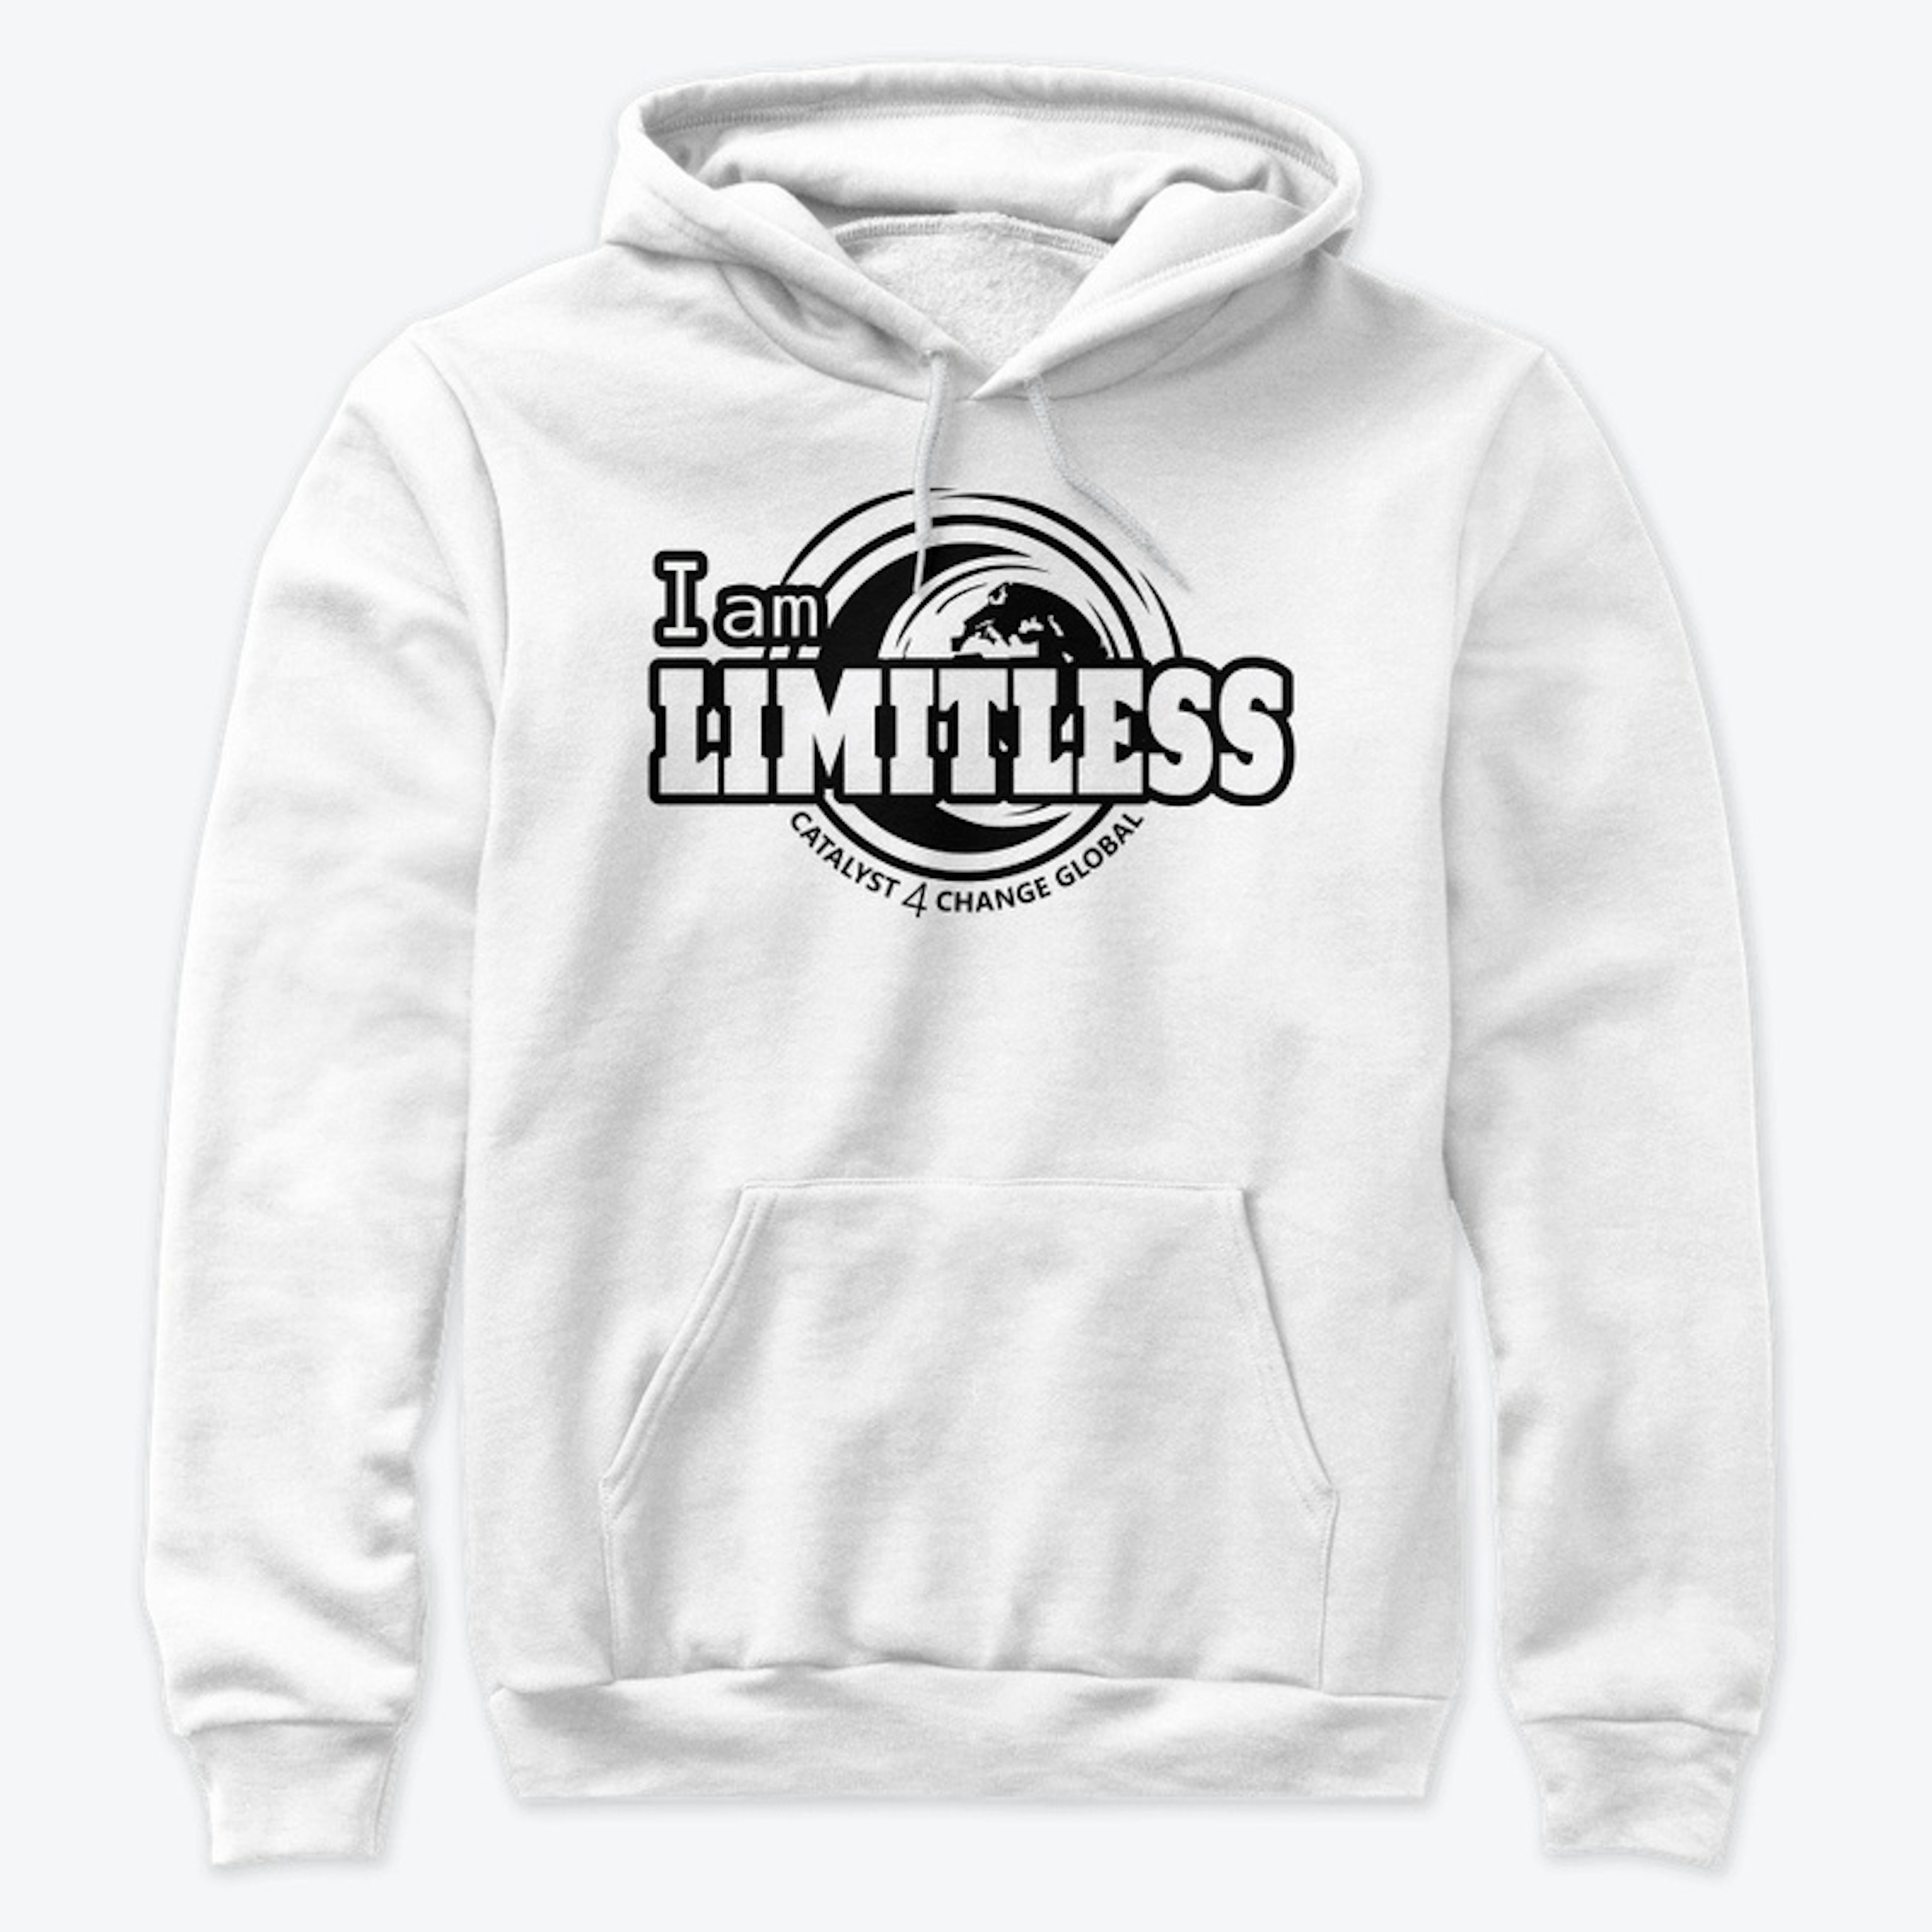 I am limitless - BW